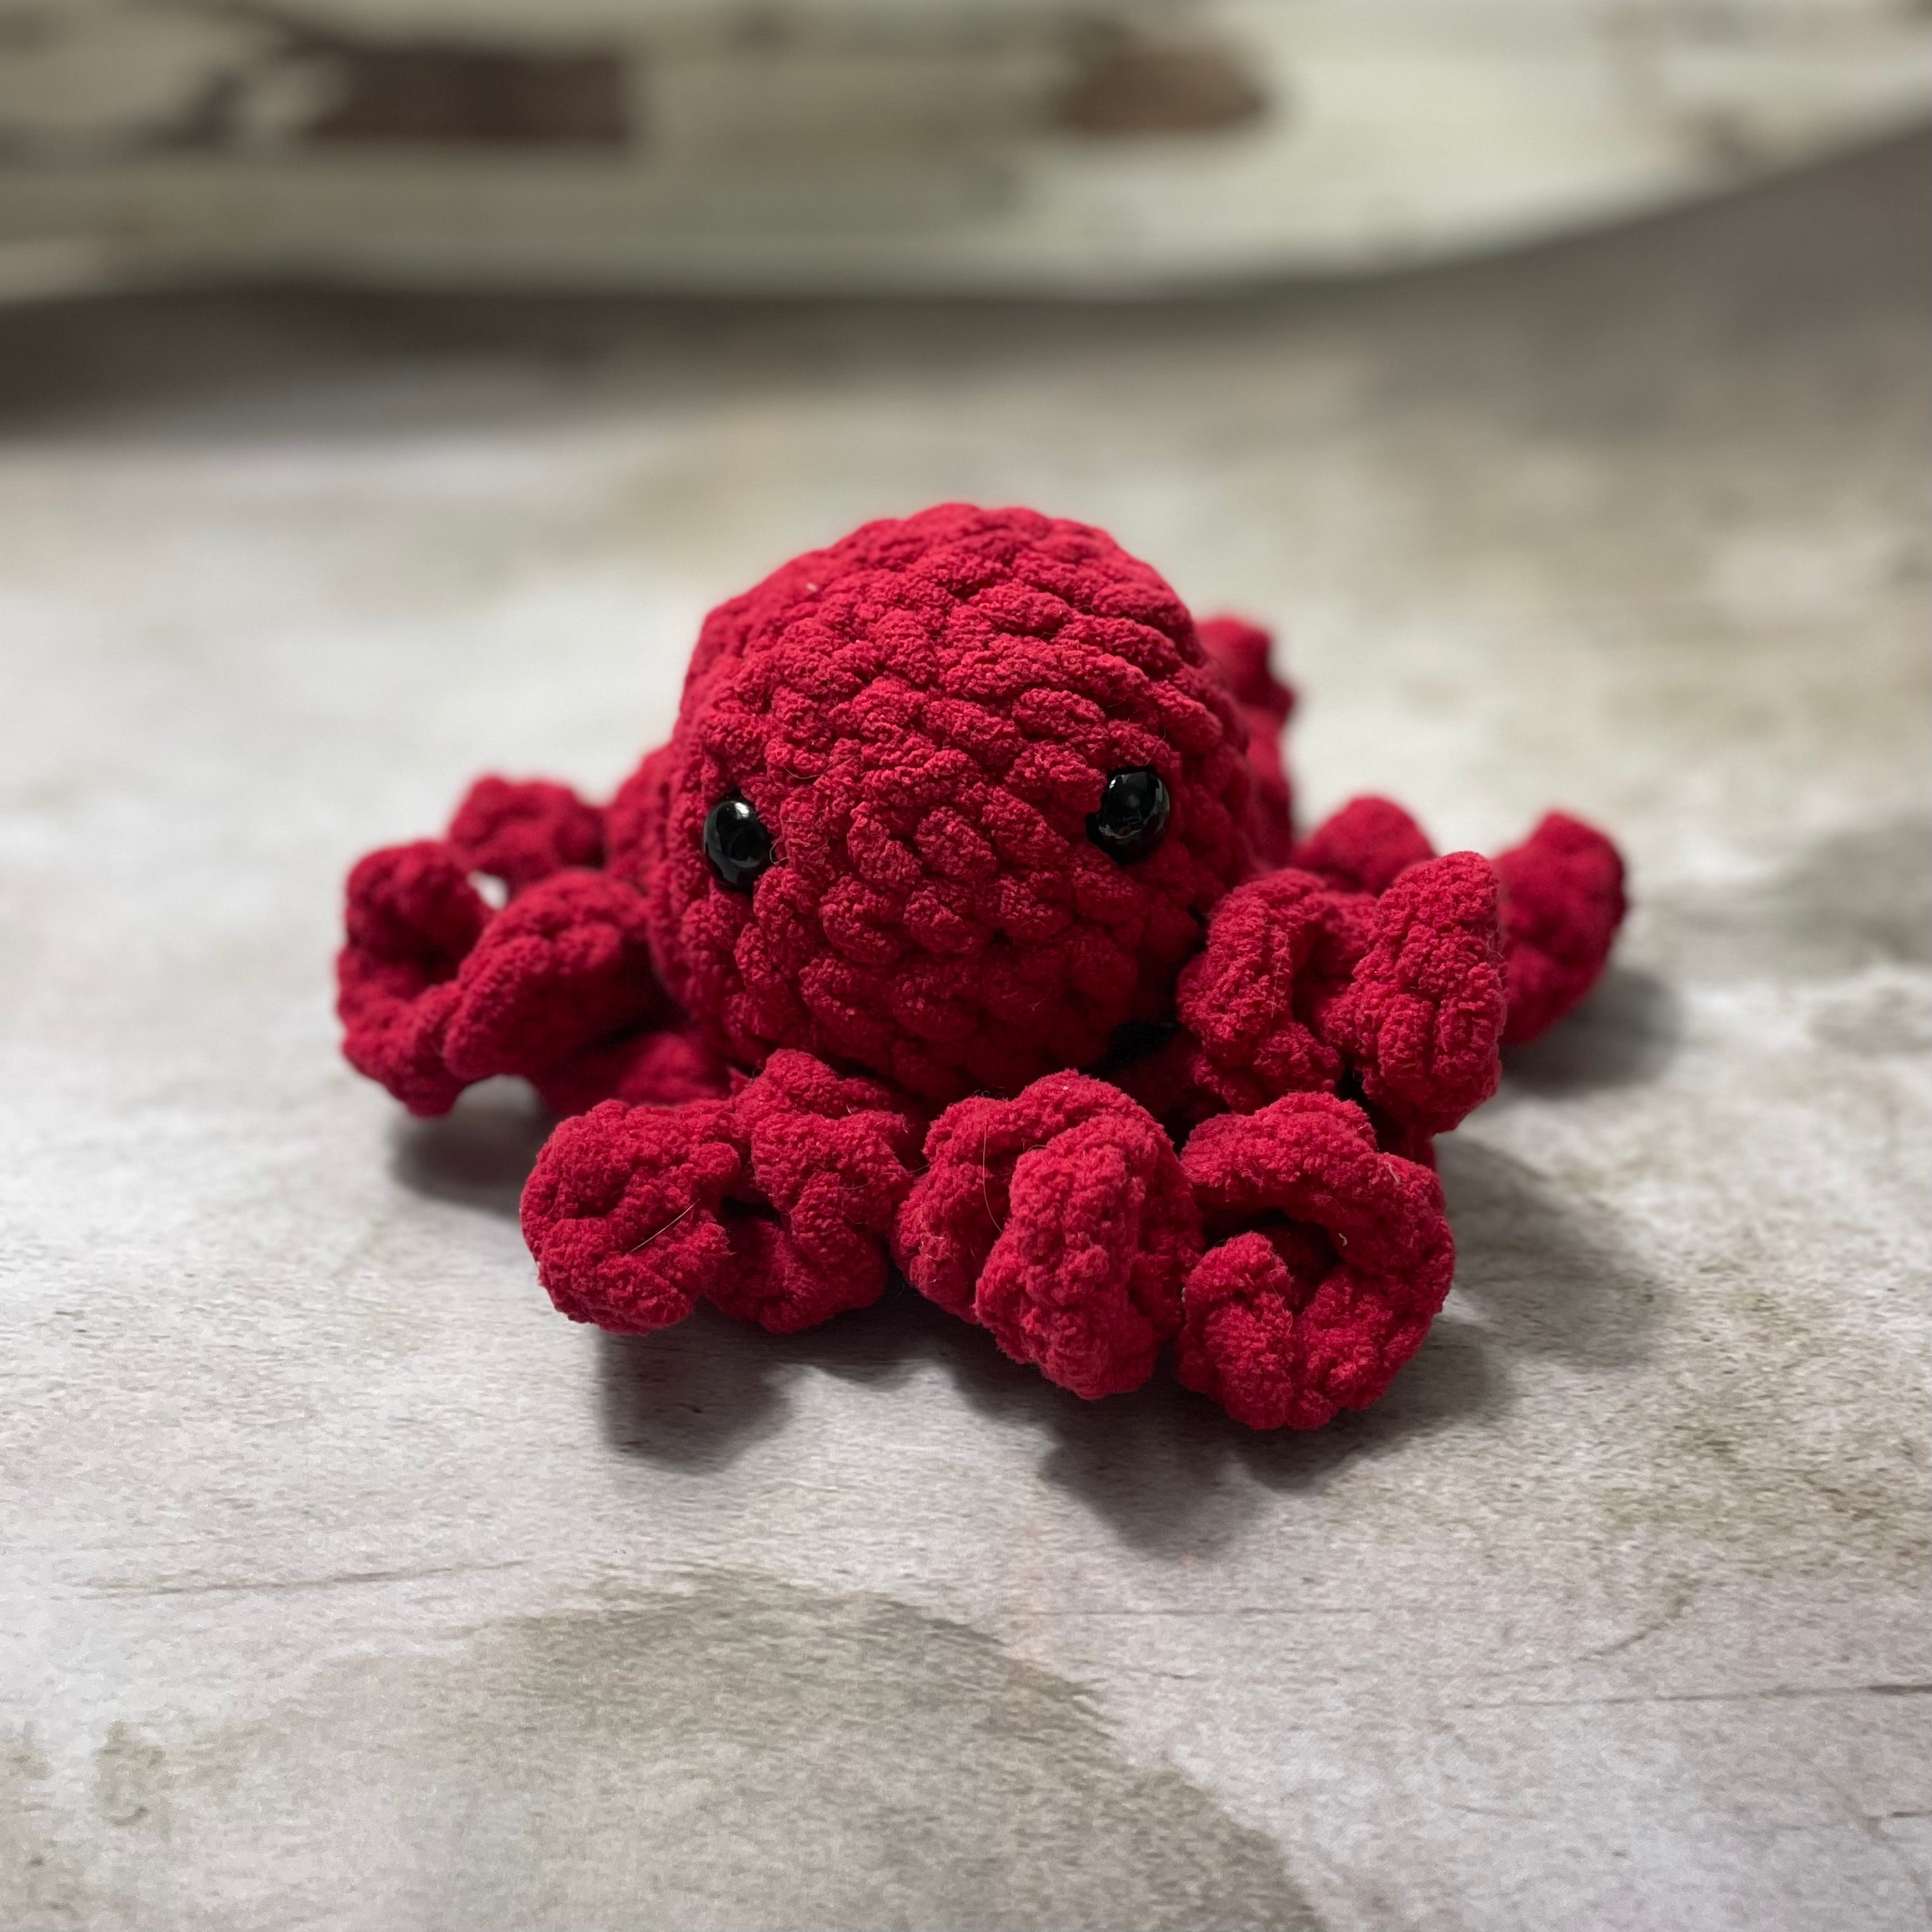 Crochet Octopus